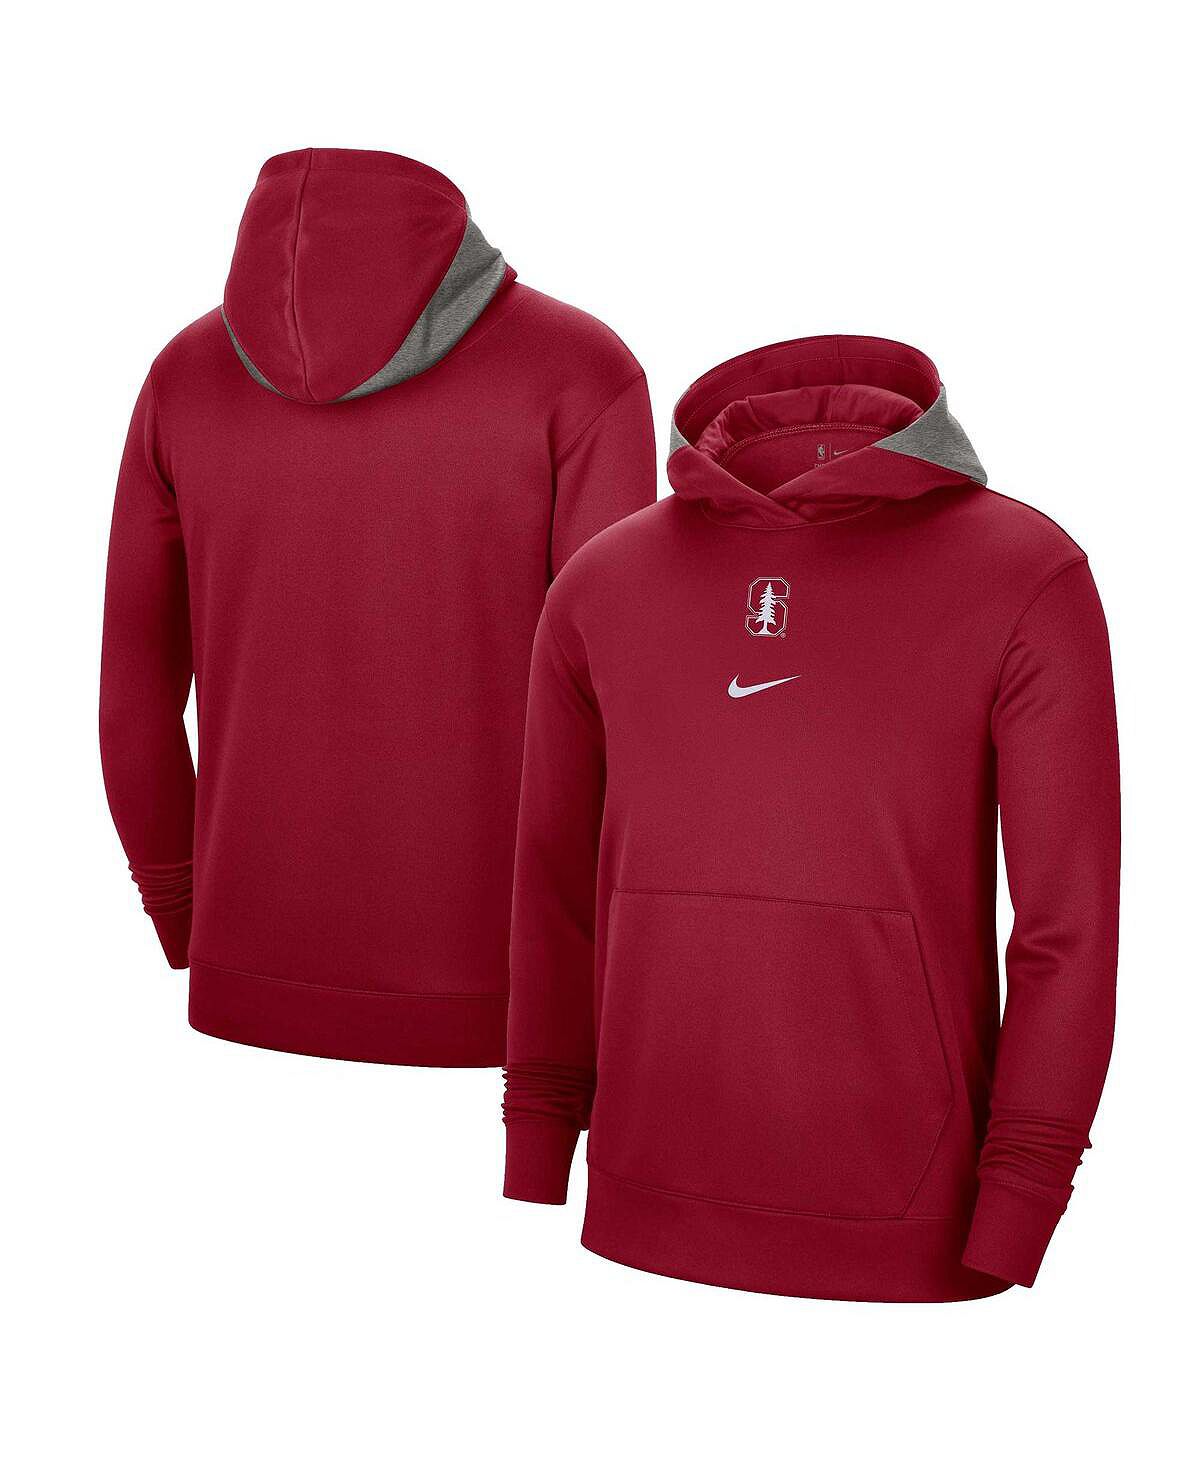 Мужской пуловер с капюшоном Cardinal Stanford Cardinal Team Basketball Spotlight Performance Nike